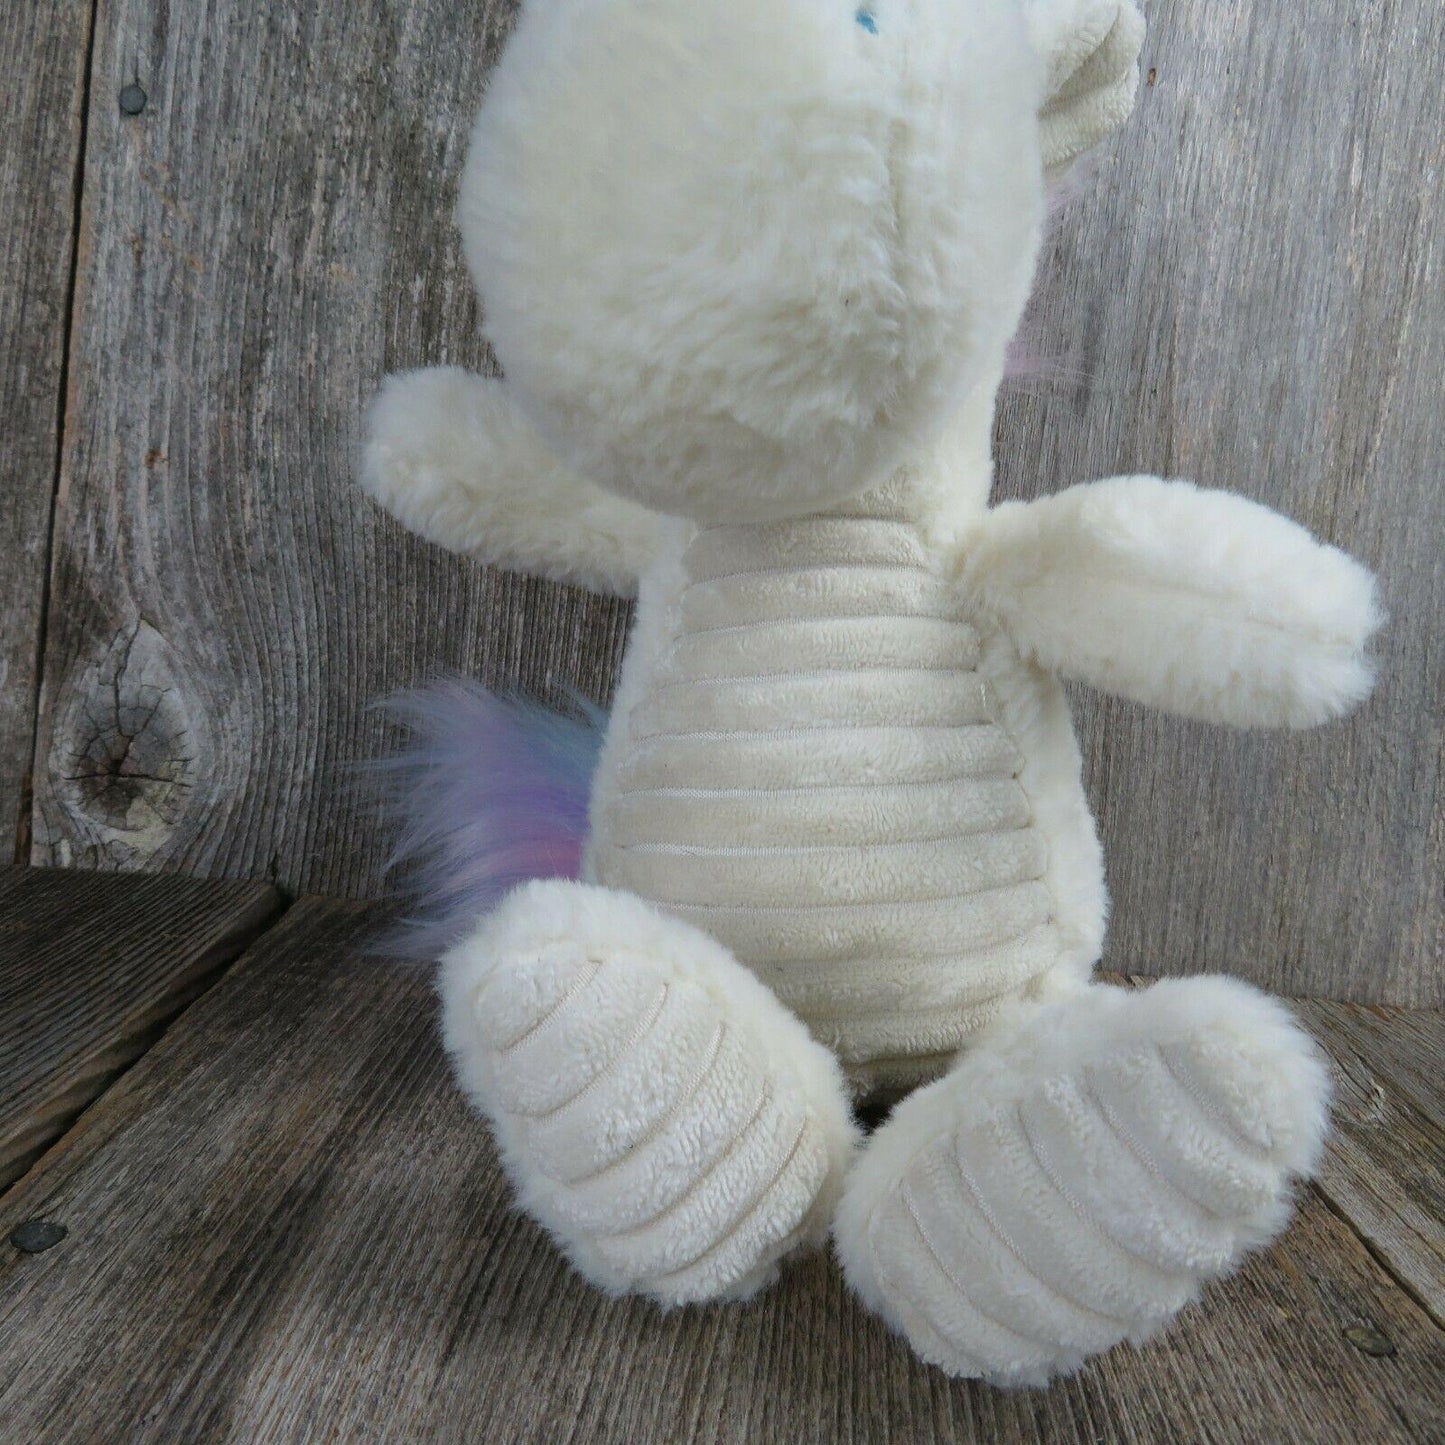 White Blue Unicorn Plush Rainbow Mane Squeaker Pet Toy Stuffed Animal